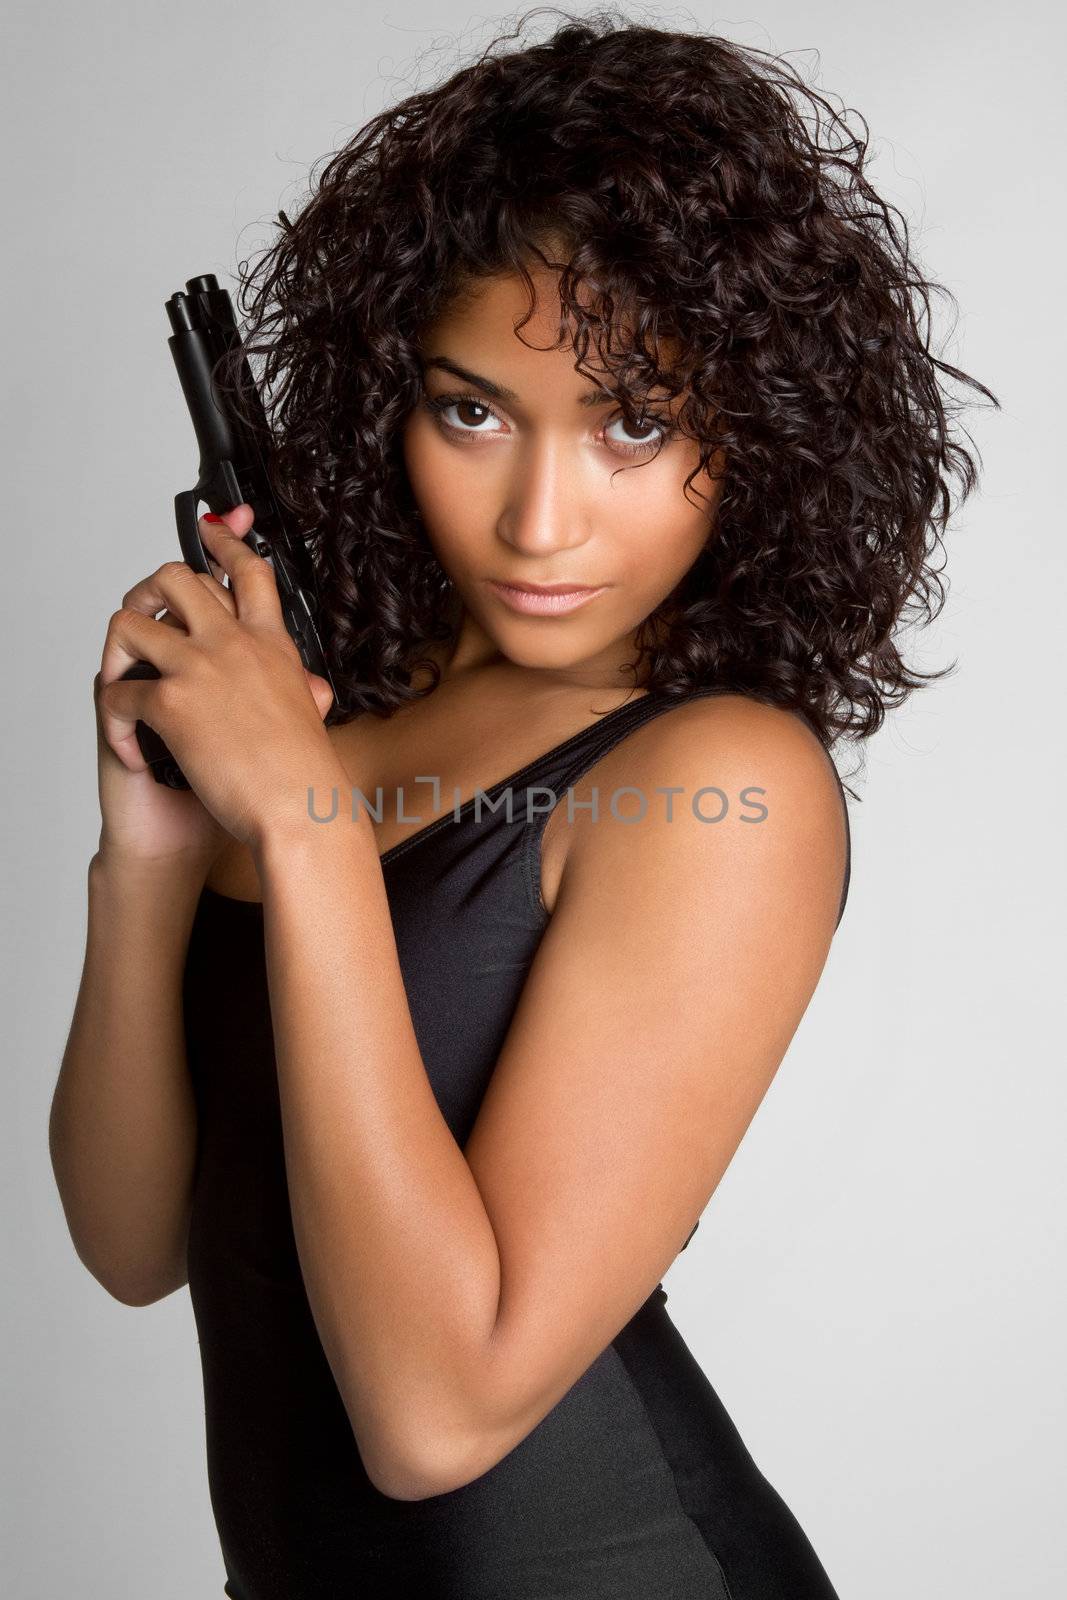 Sexy black woman holding gun